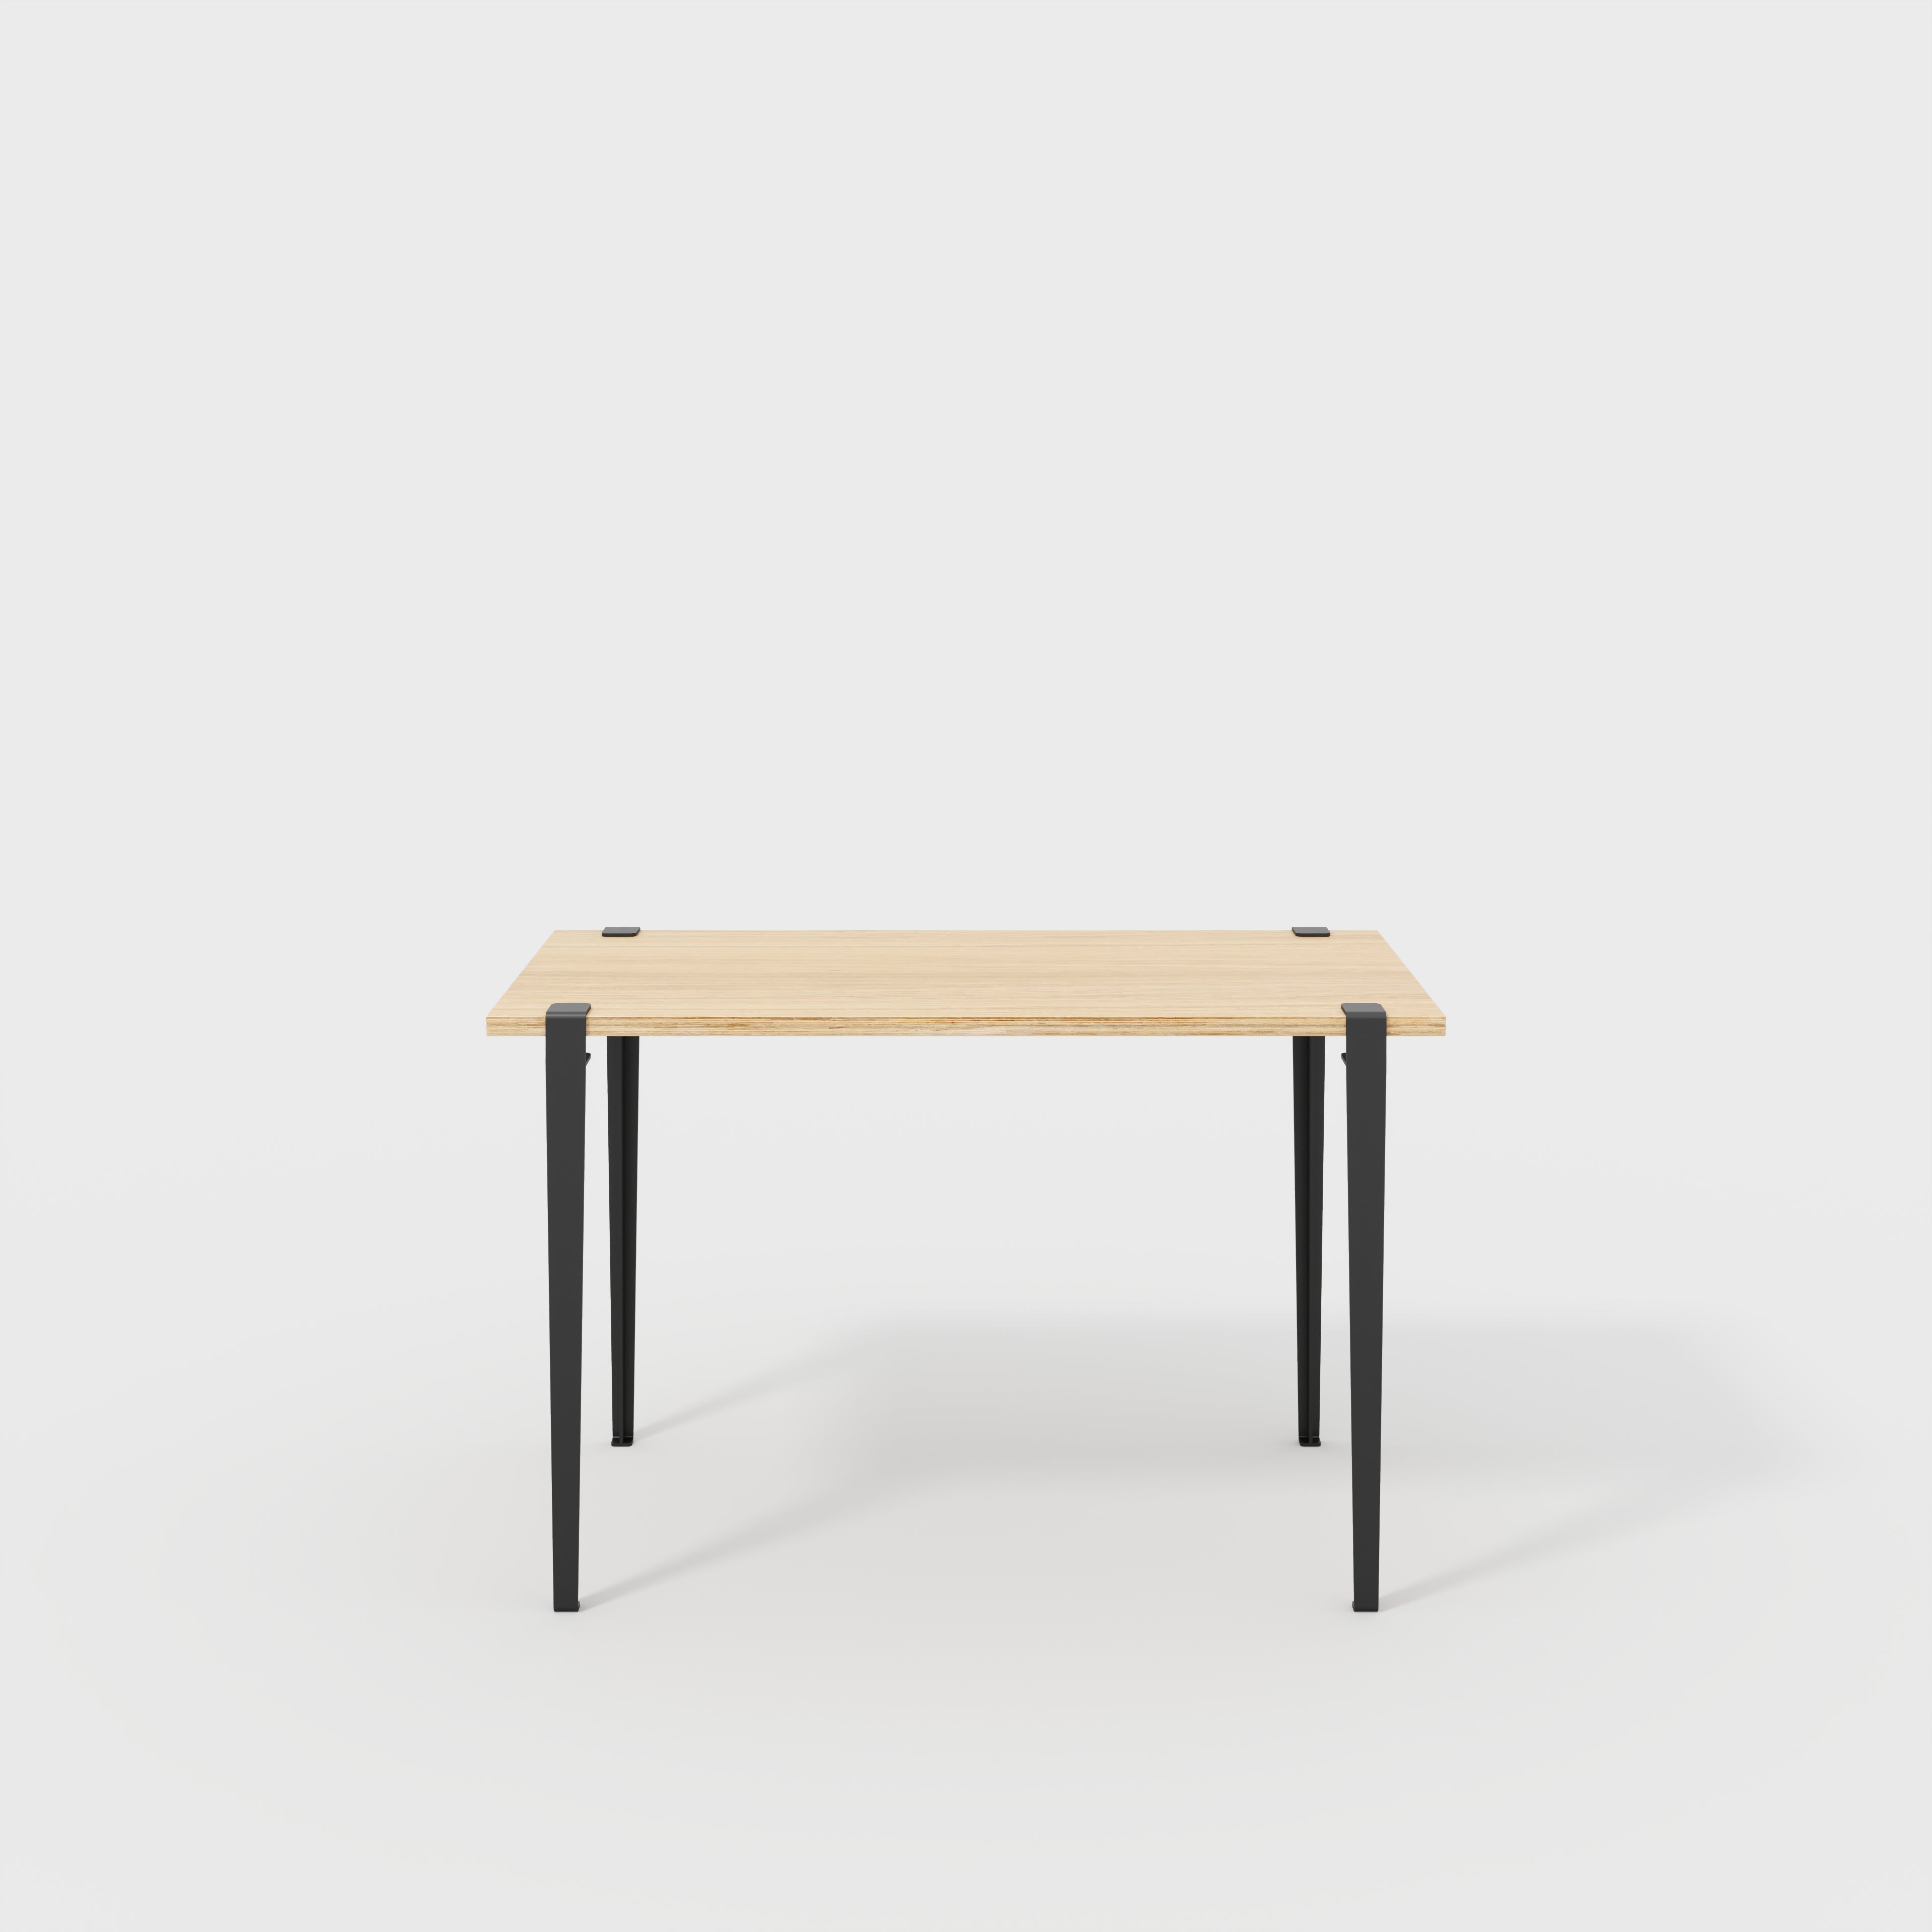 Desk with Black Tiptoe Legs - Plywood - Oak - 1200(w) x 600(d) x 750(h)